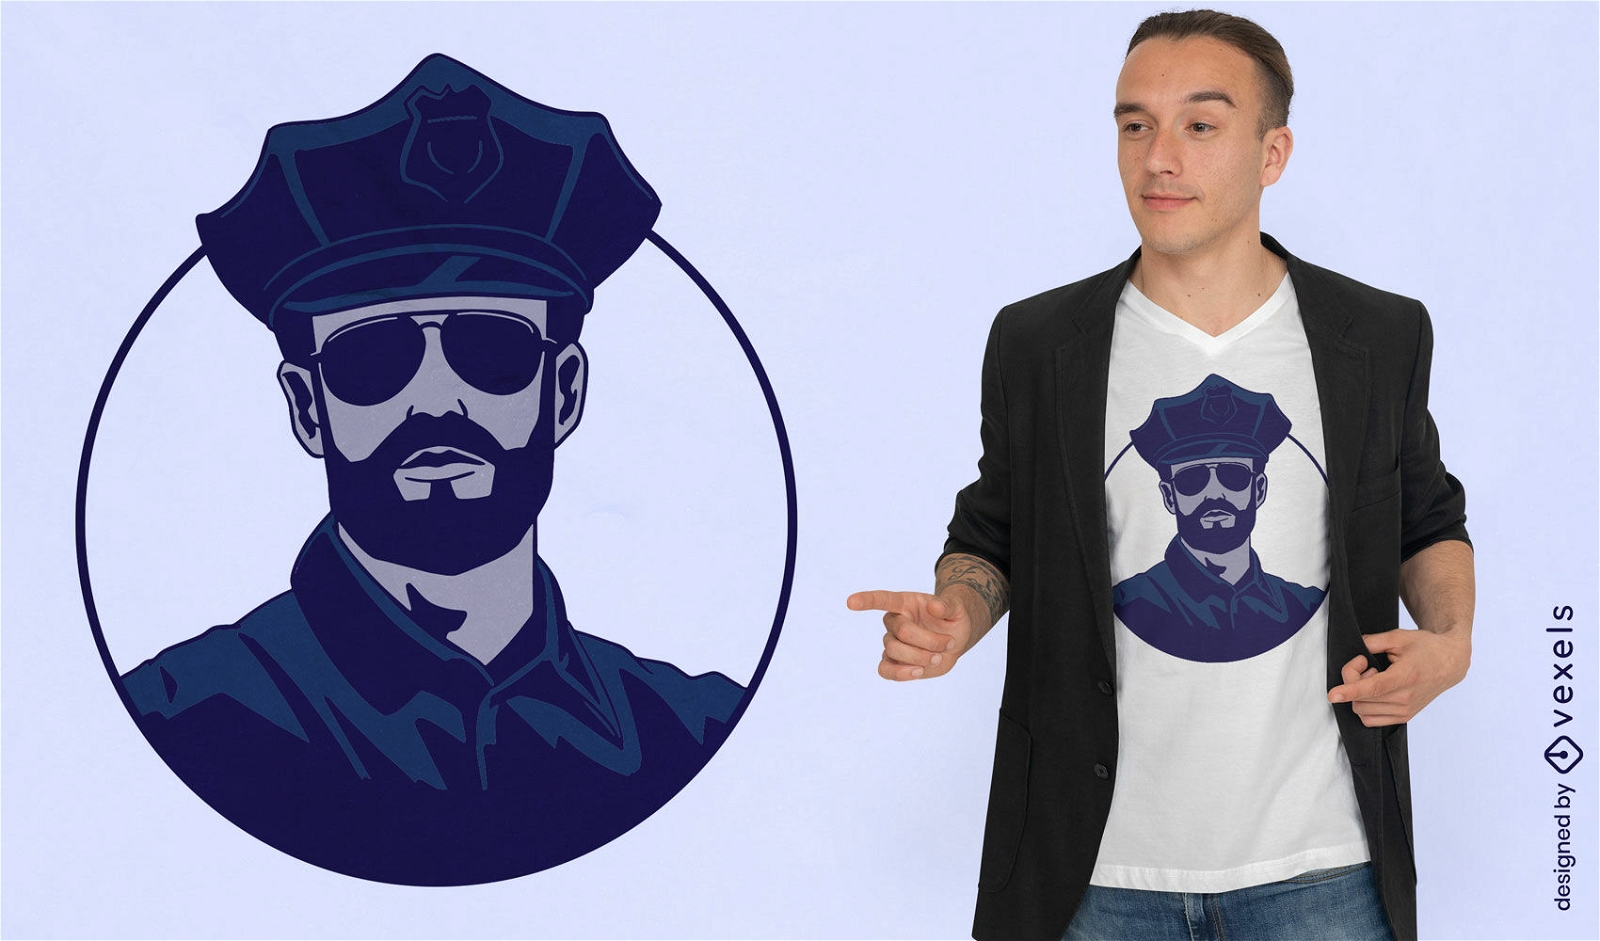 Cool policeman t-shirt design